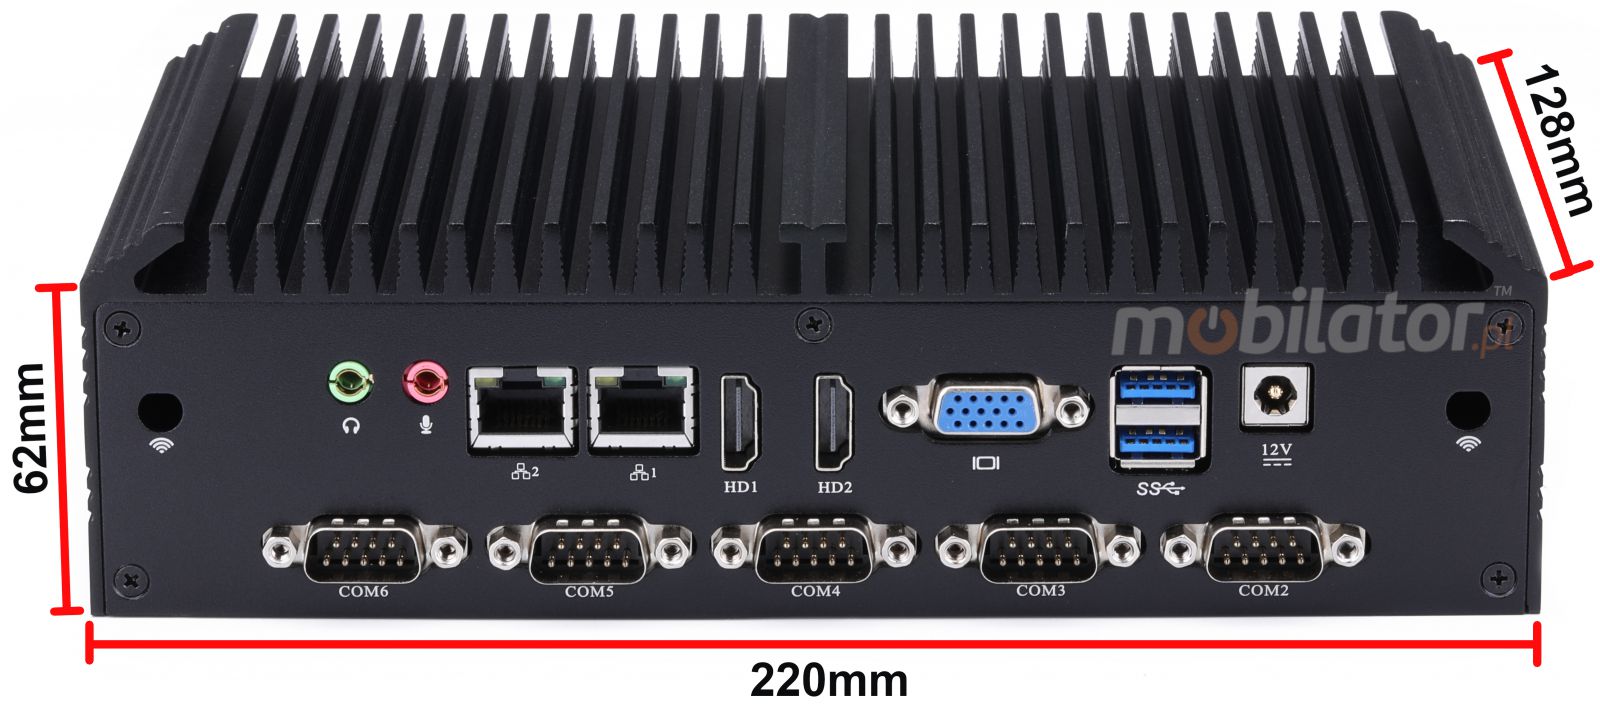 mBox X105 v.1 - Industrial Mini Computer with Intel Celeron 3855U Processor - M.2 disk - USB 3.0, 2x HDMI - Dimensions